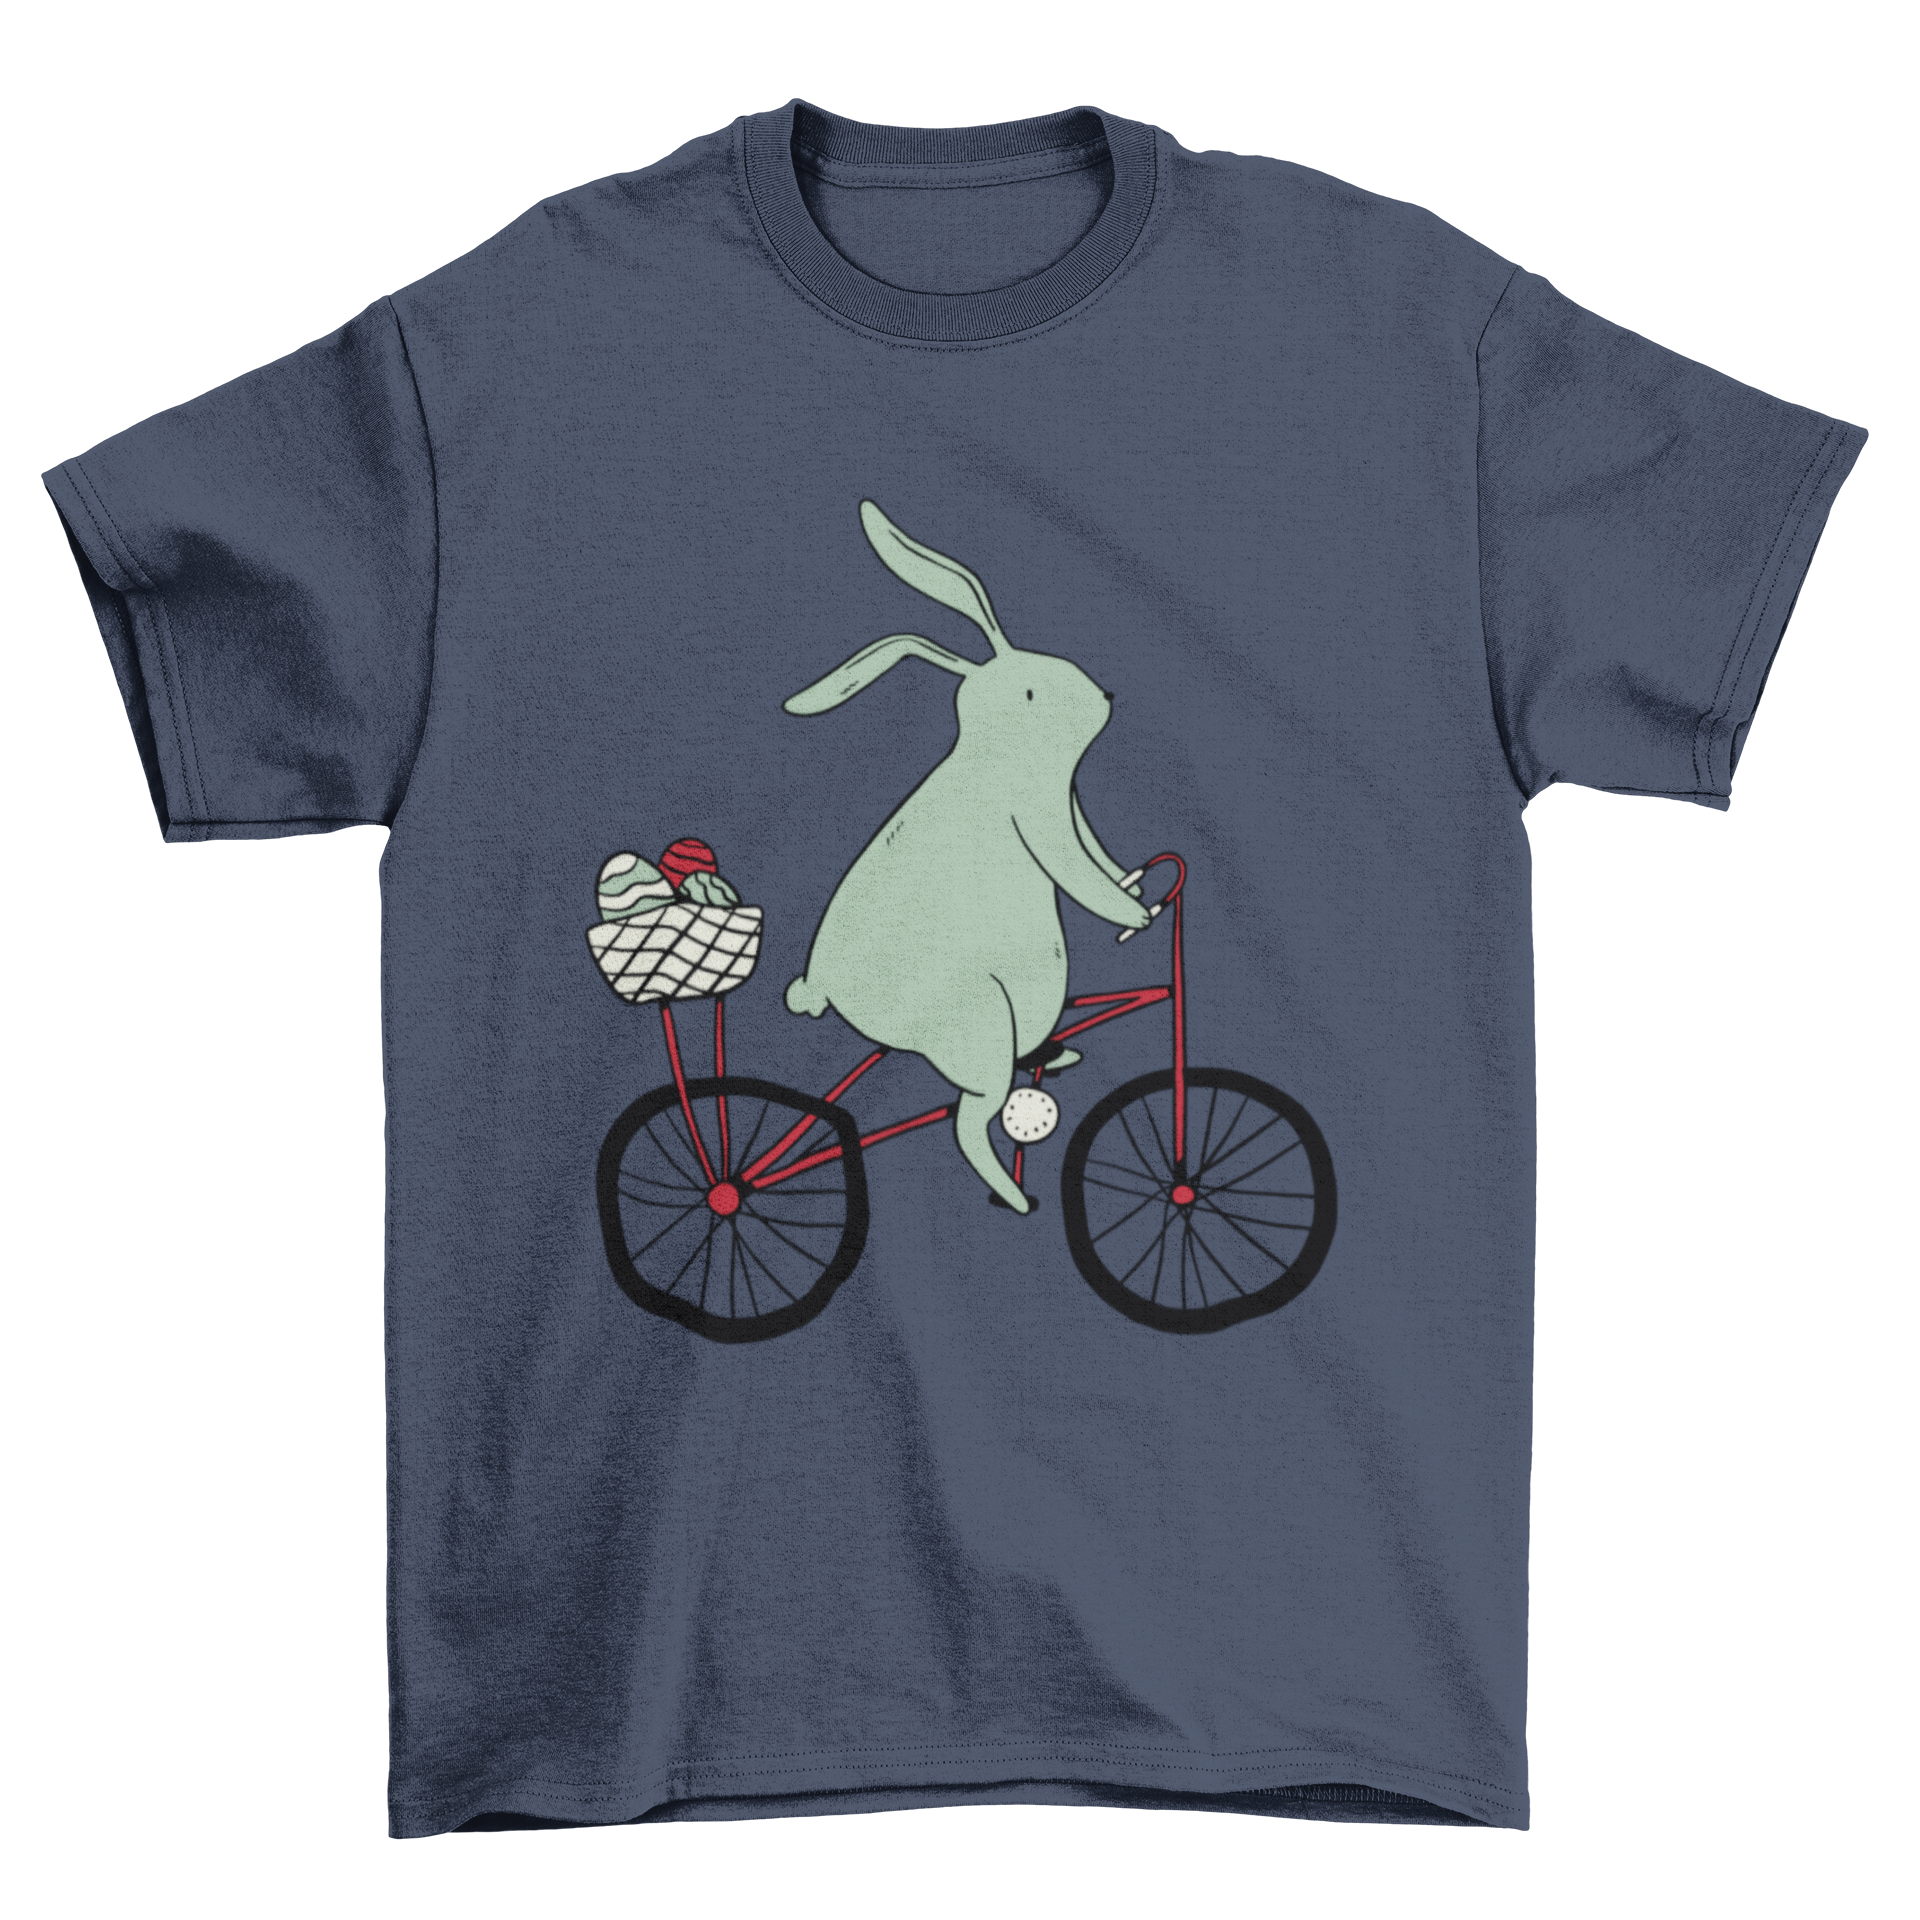 Easter bunny riding bike t-shirt design | Turquoise Theseus